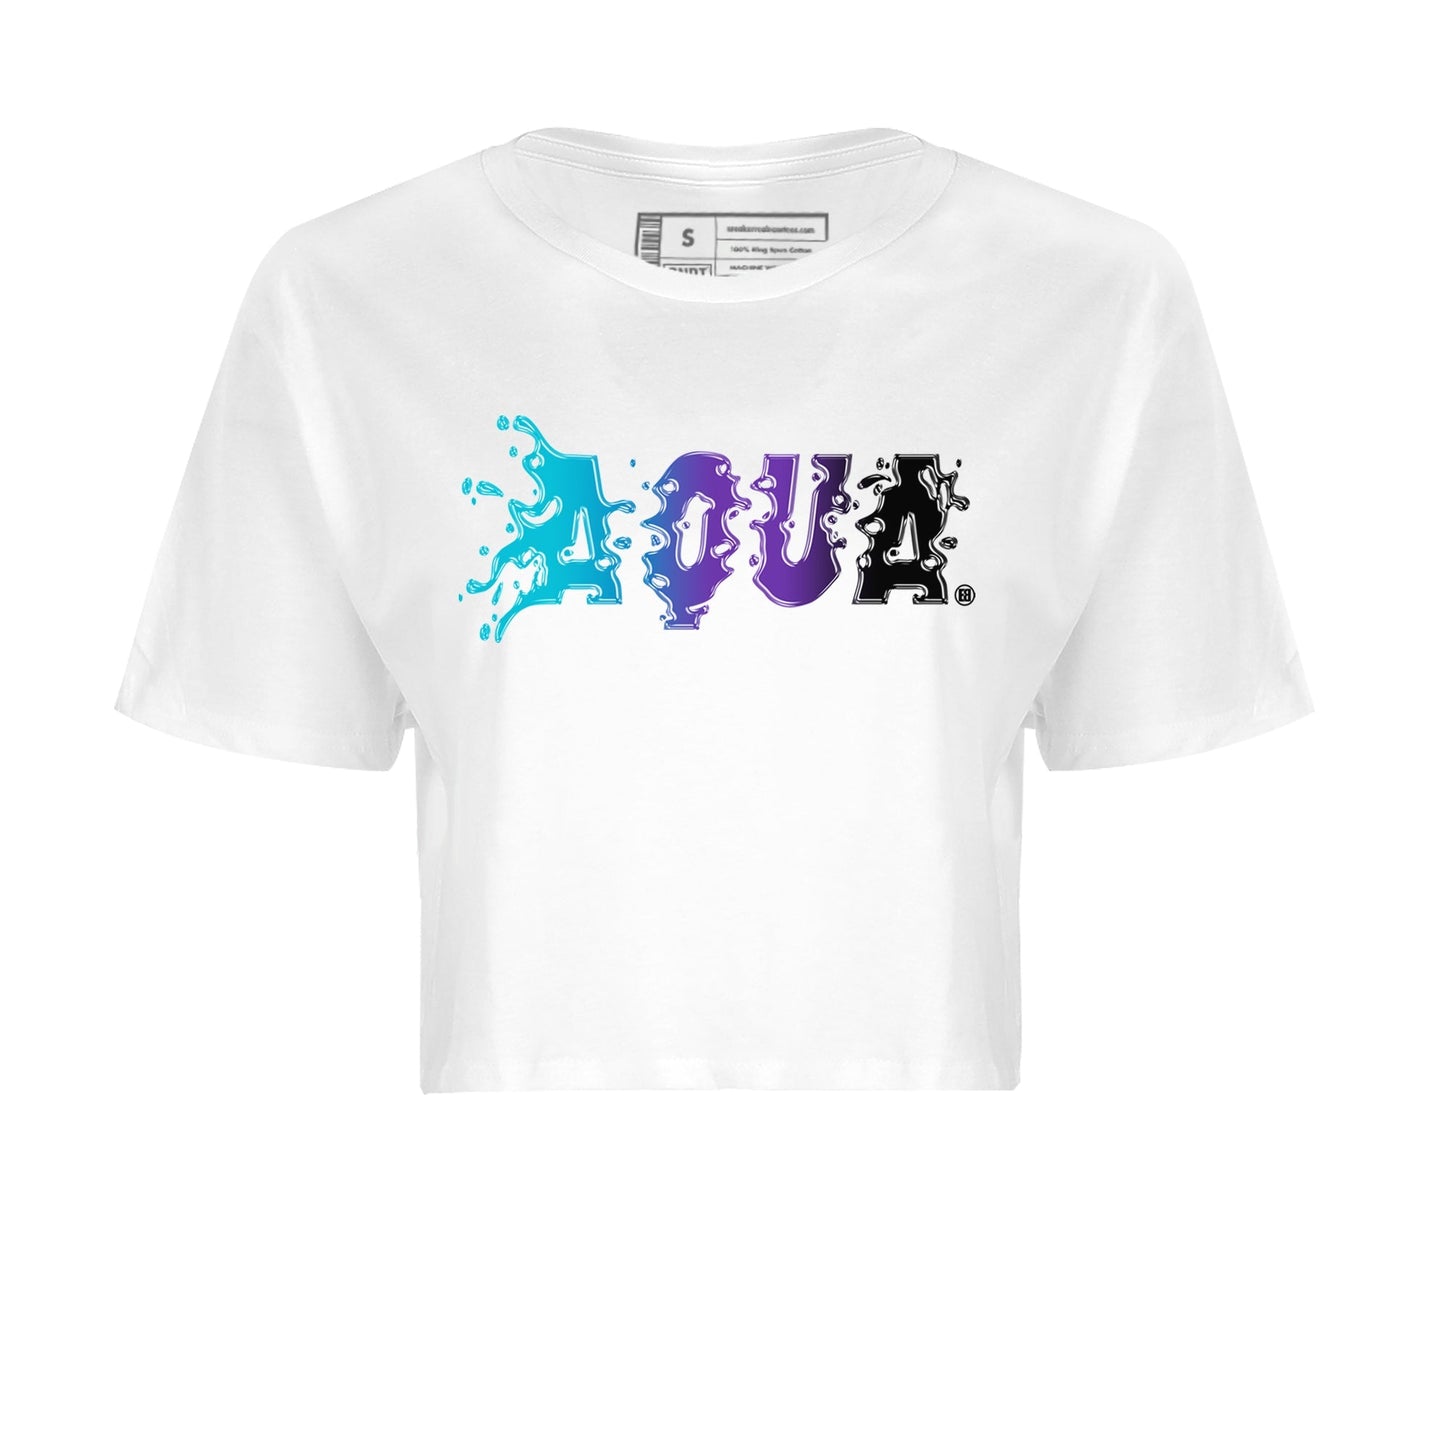 Air Jordan 6 Aqua Sneaker Match Tees Aqua Sneaker Tees AJ6 Aqua Sneaker Release T-Shirt Women's Shirts White 2